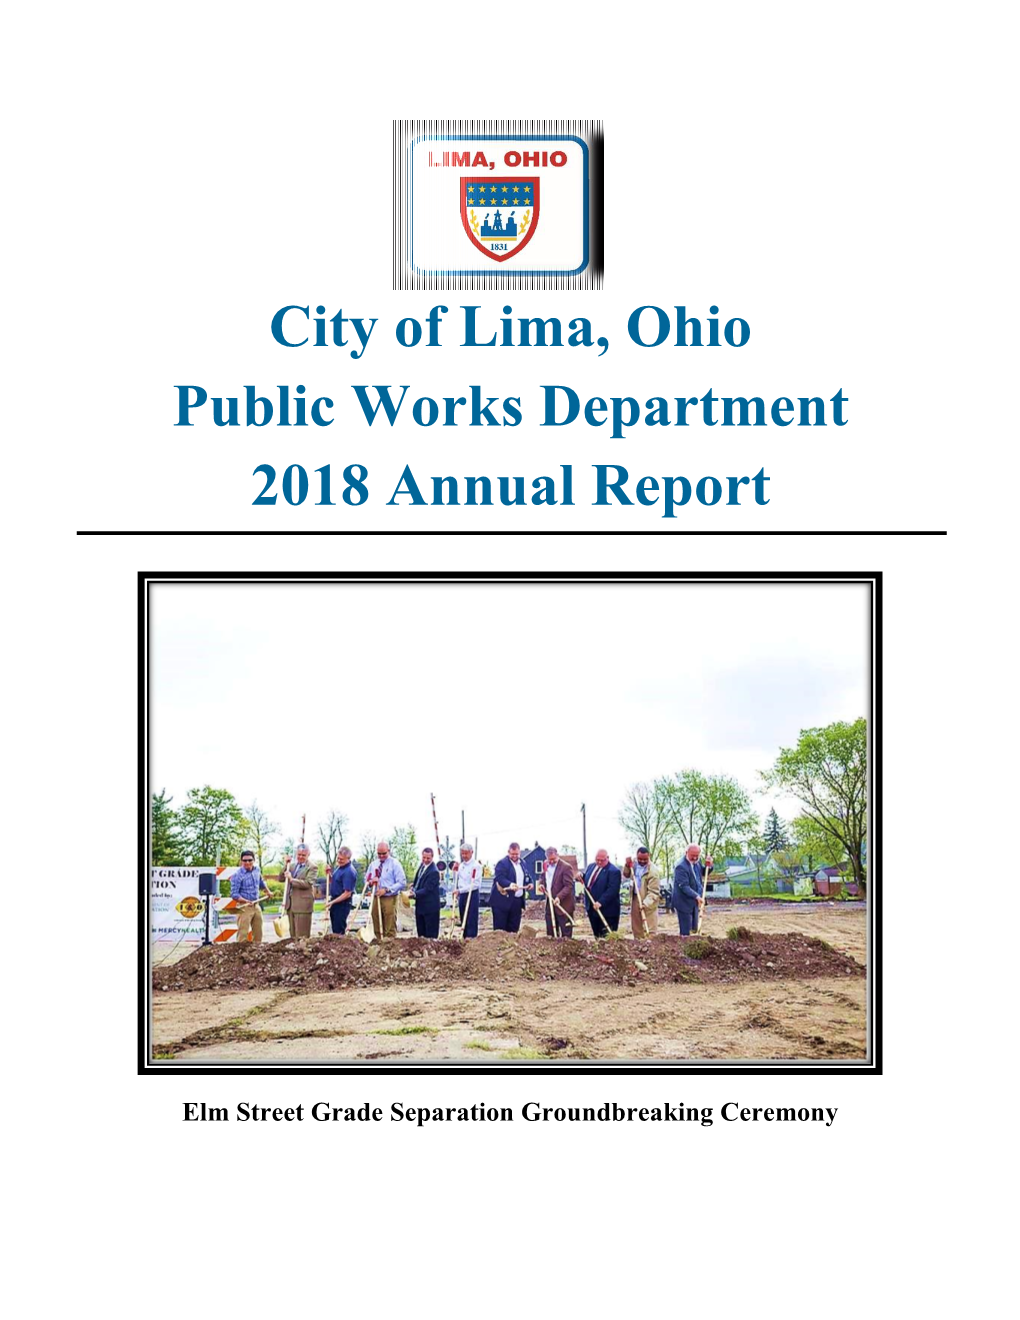 City of Lima, Ohio Public Works Department 2018 Annual Report